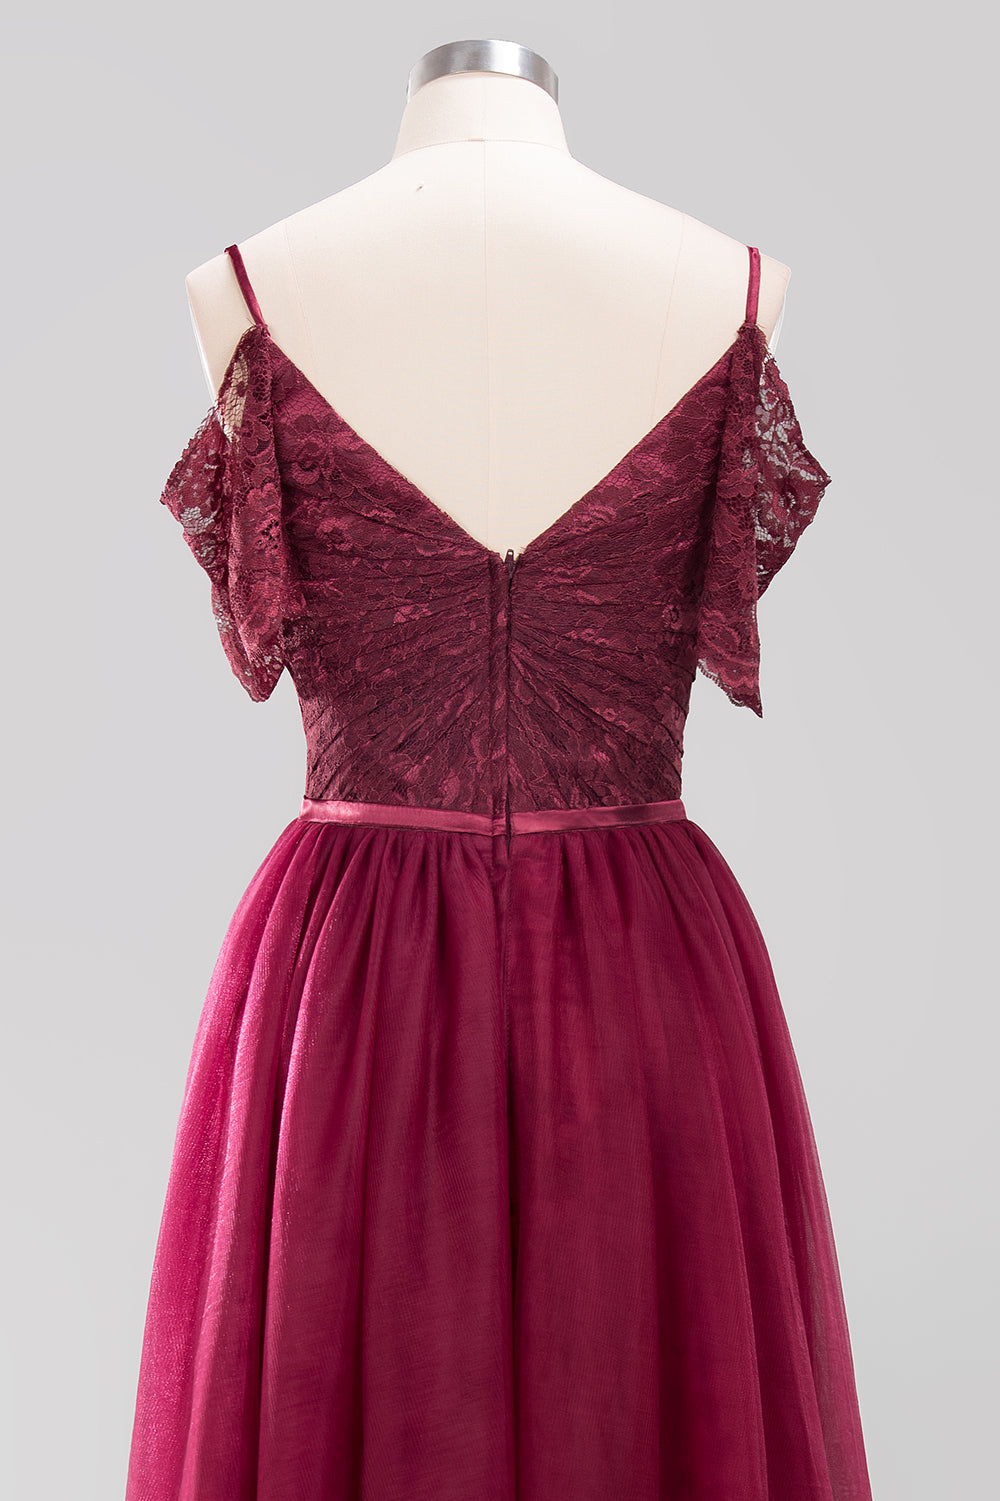 Affordable Chiffon Off-the-Shoulder Burgundy Lace Bridesmaid Dresses-27dress